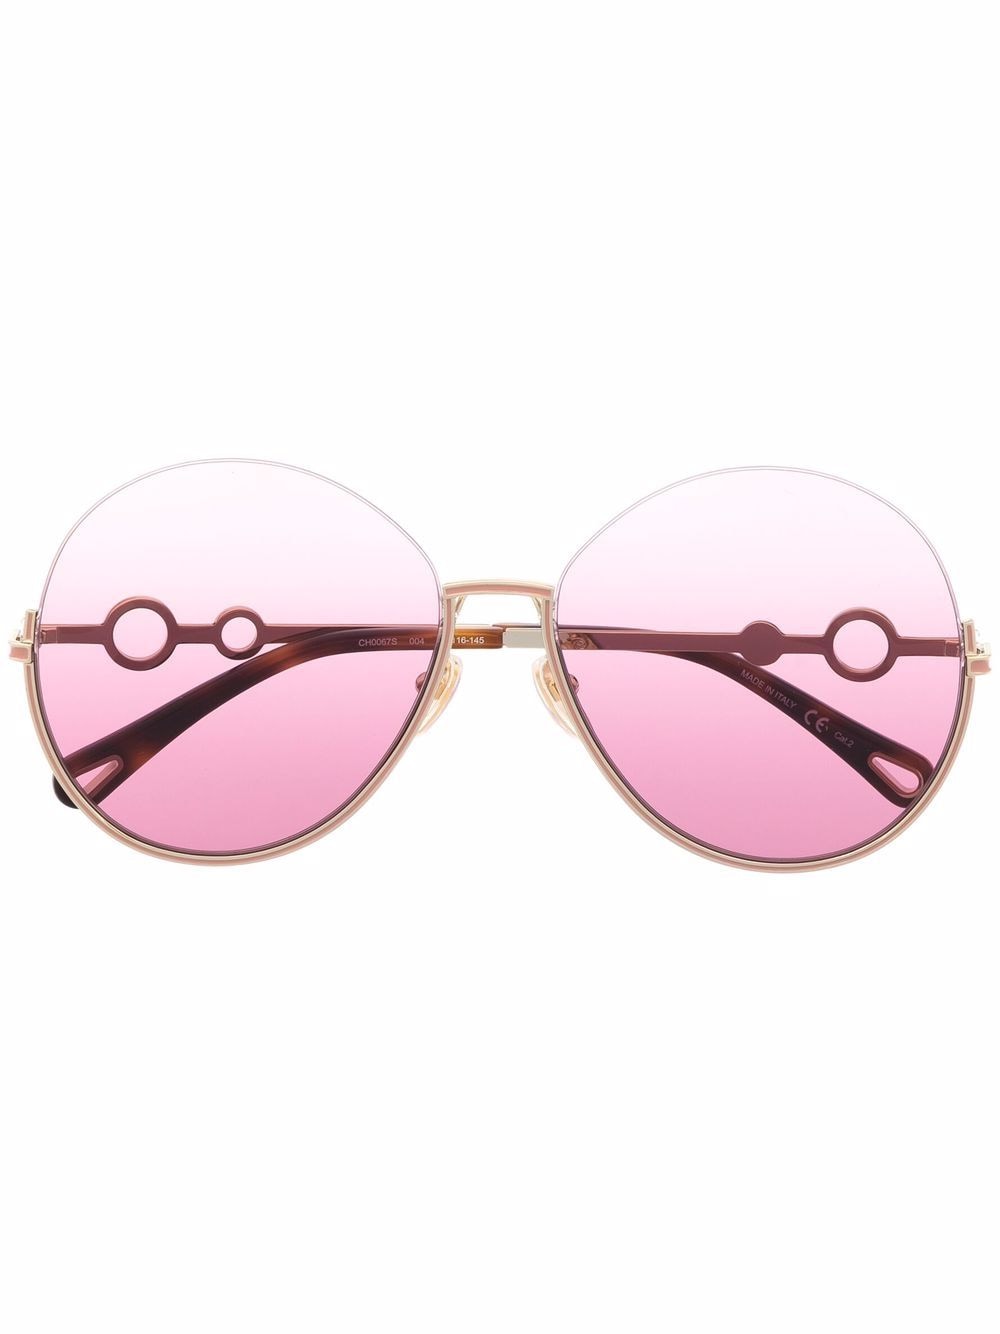 Chloé Eyewear Sofya Sonnenbrille - Gold von Chloé Eyewear